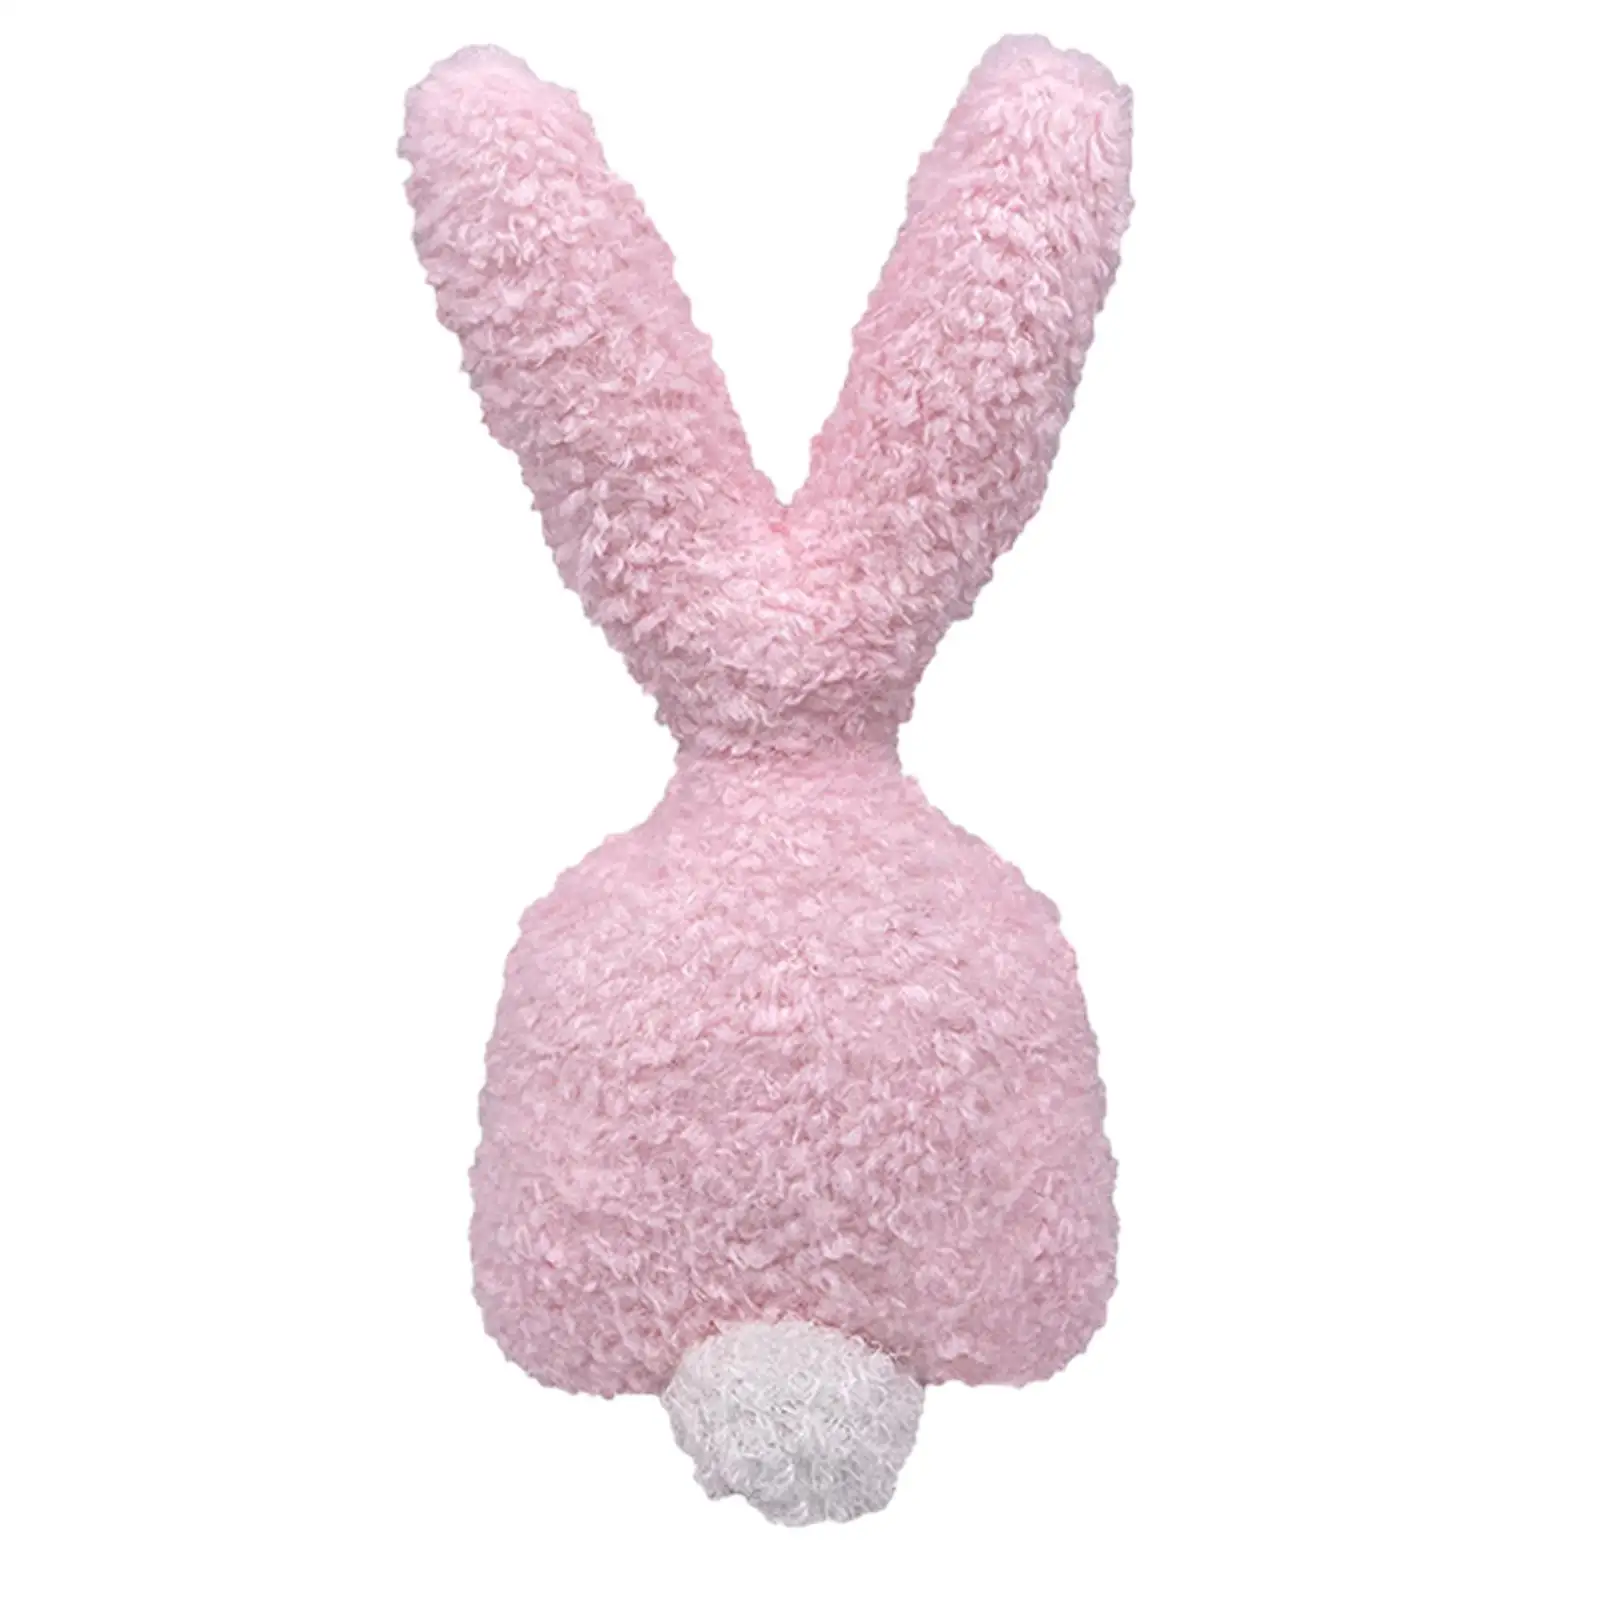 Rabbit Stuffed Animal Throw Pillow Office Rabbit Doll Easter Bunny Plush Toy